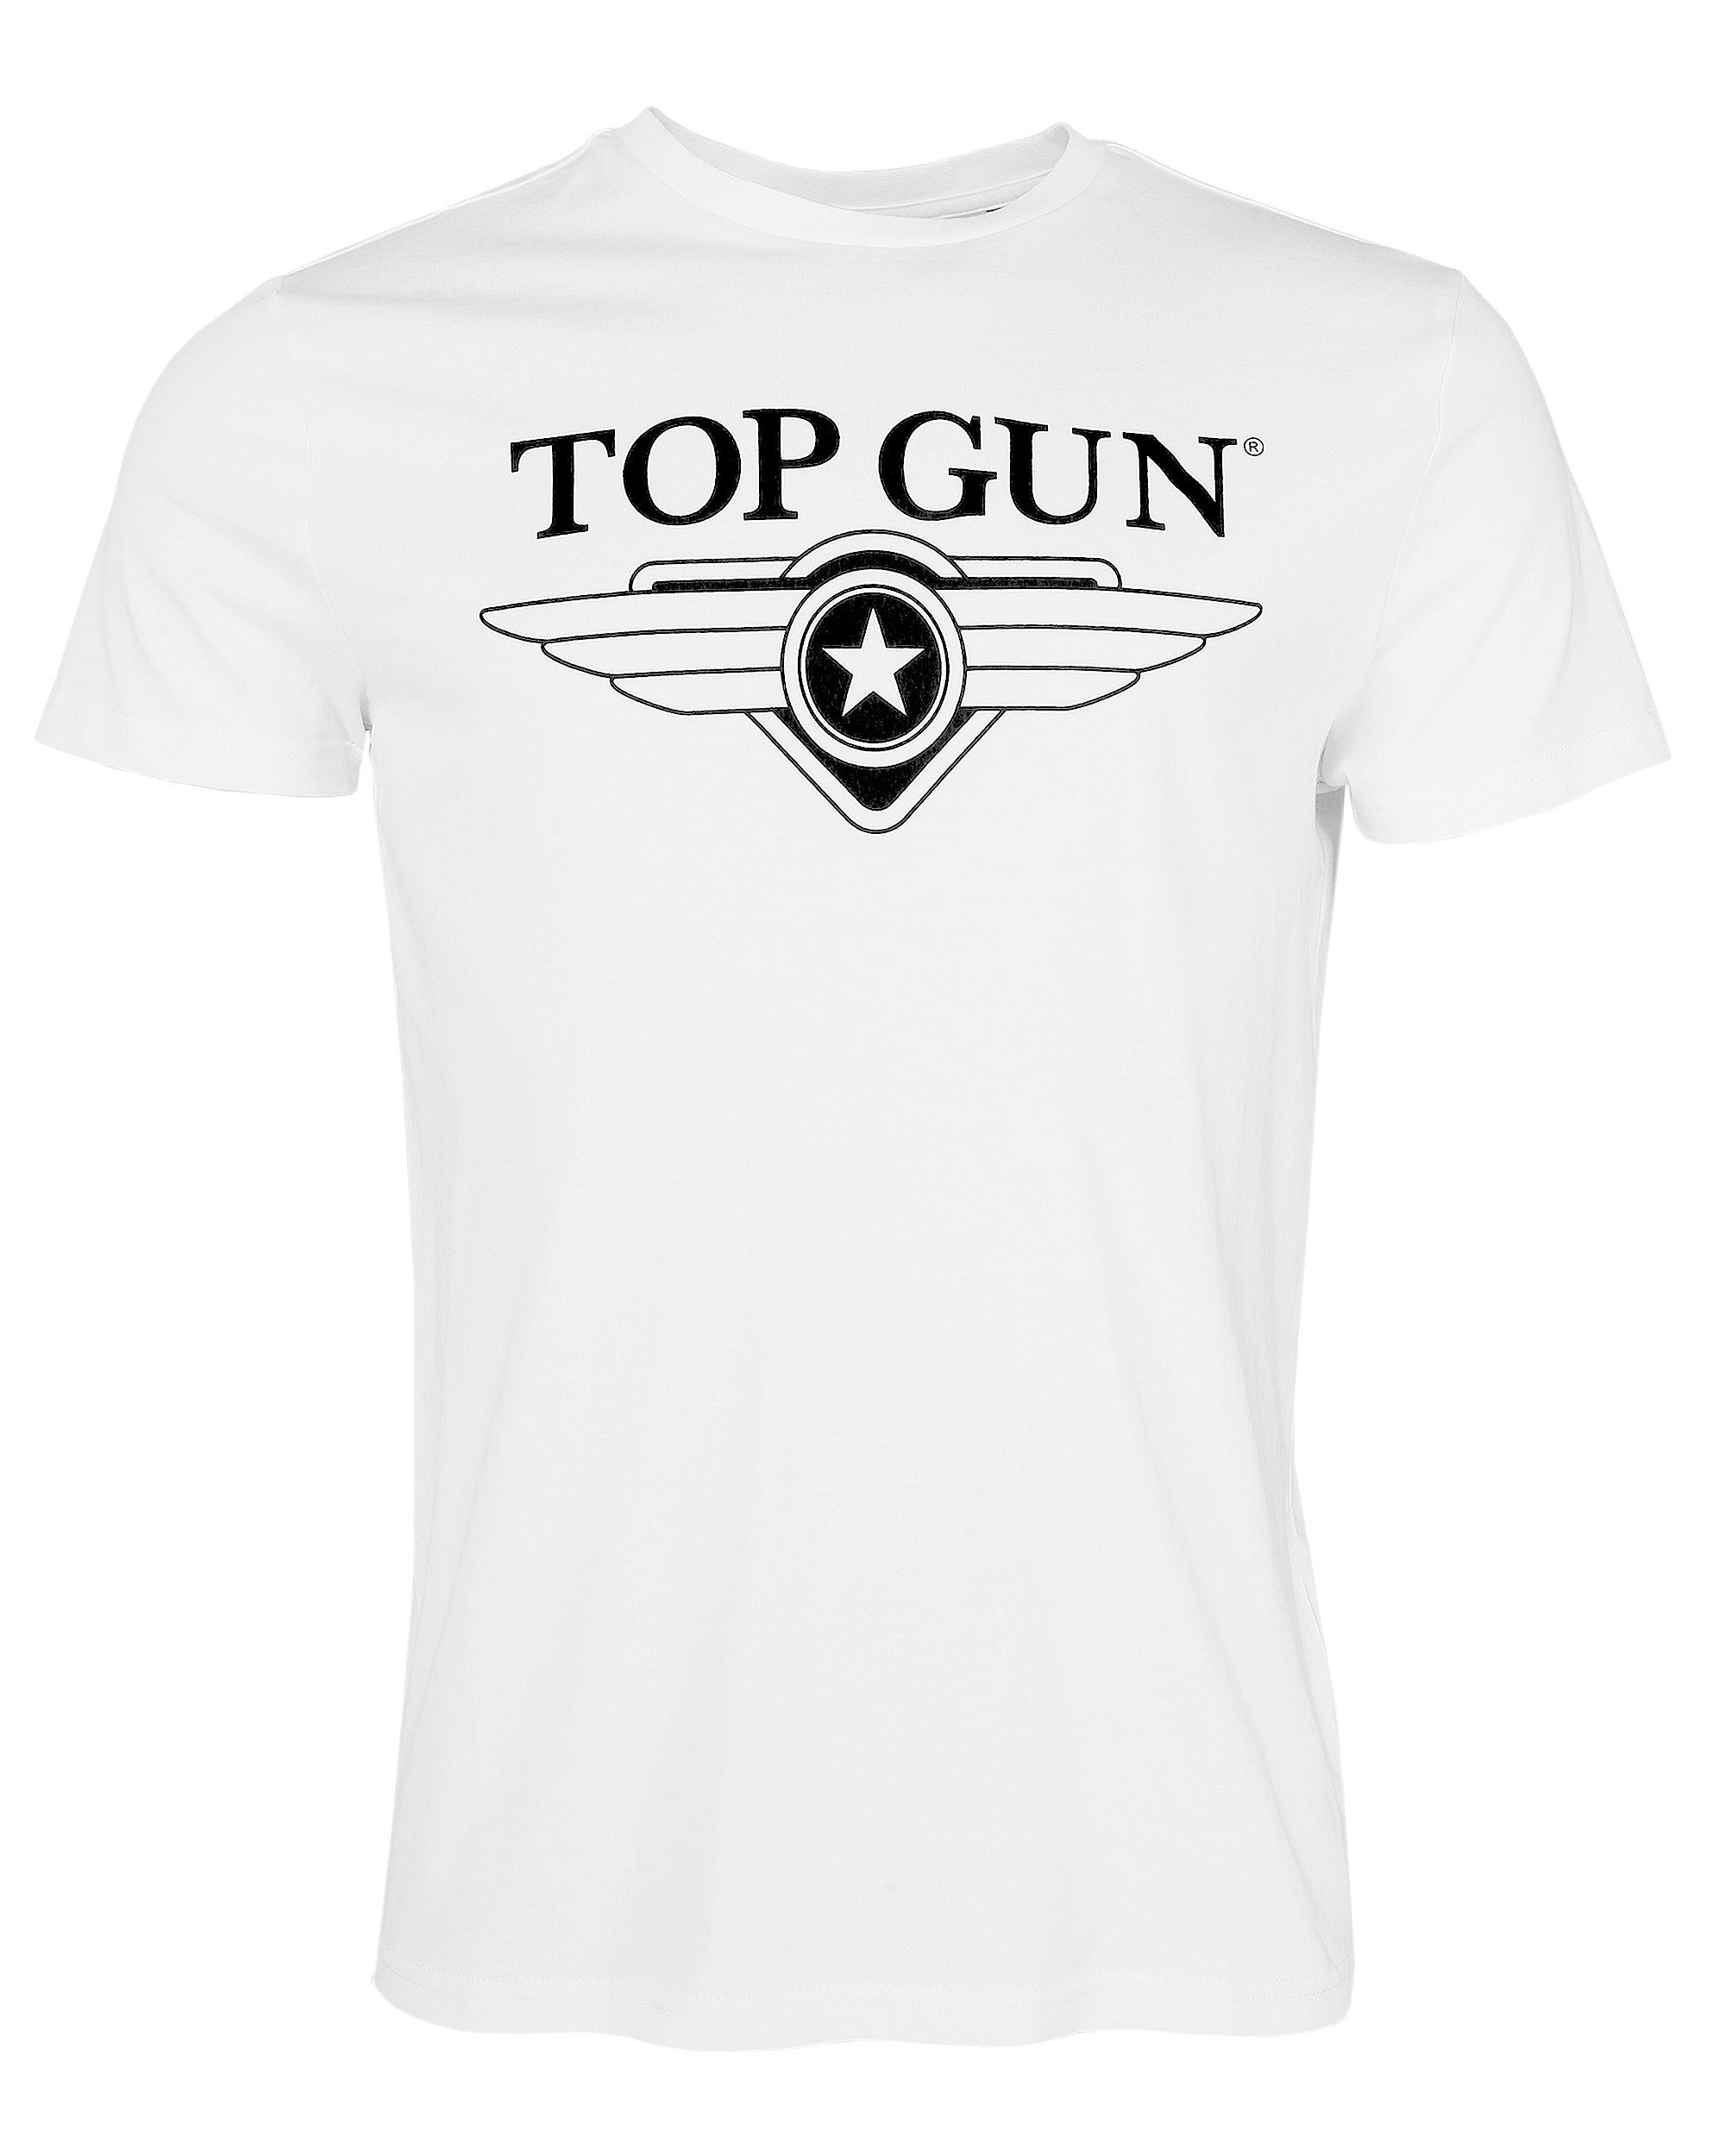 TG20201045 GUN TOP T-Shirt white